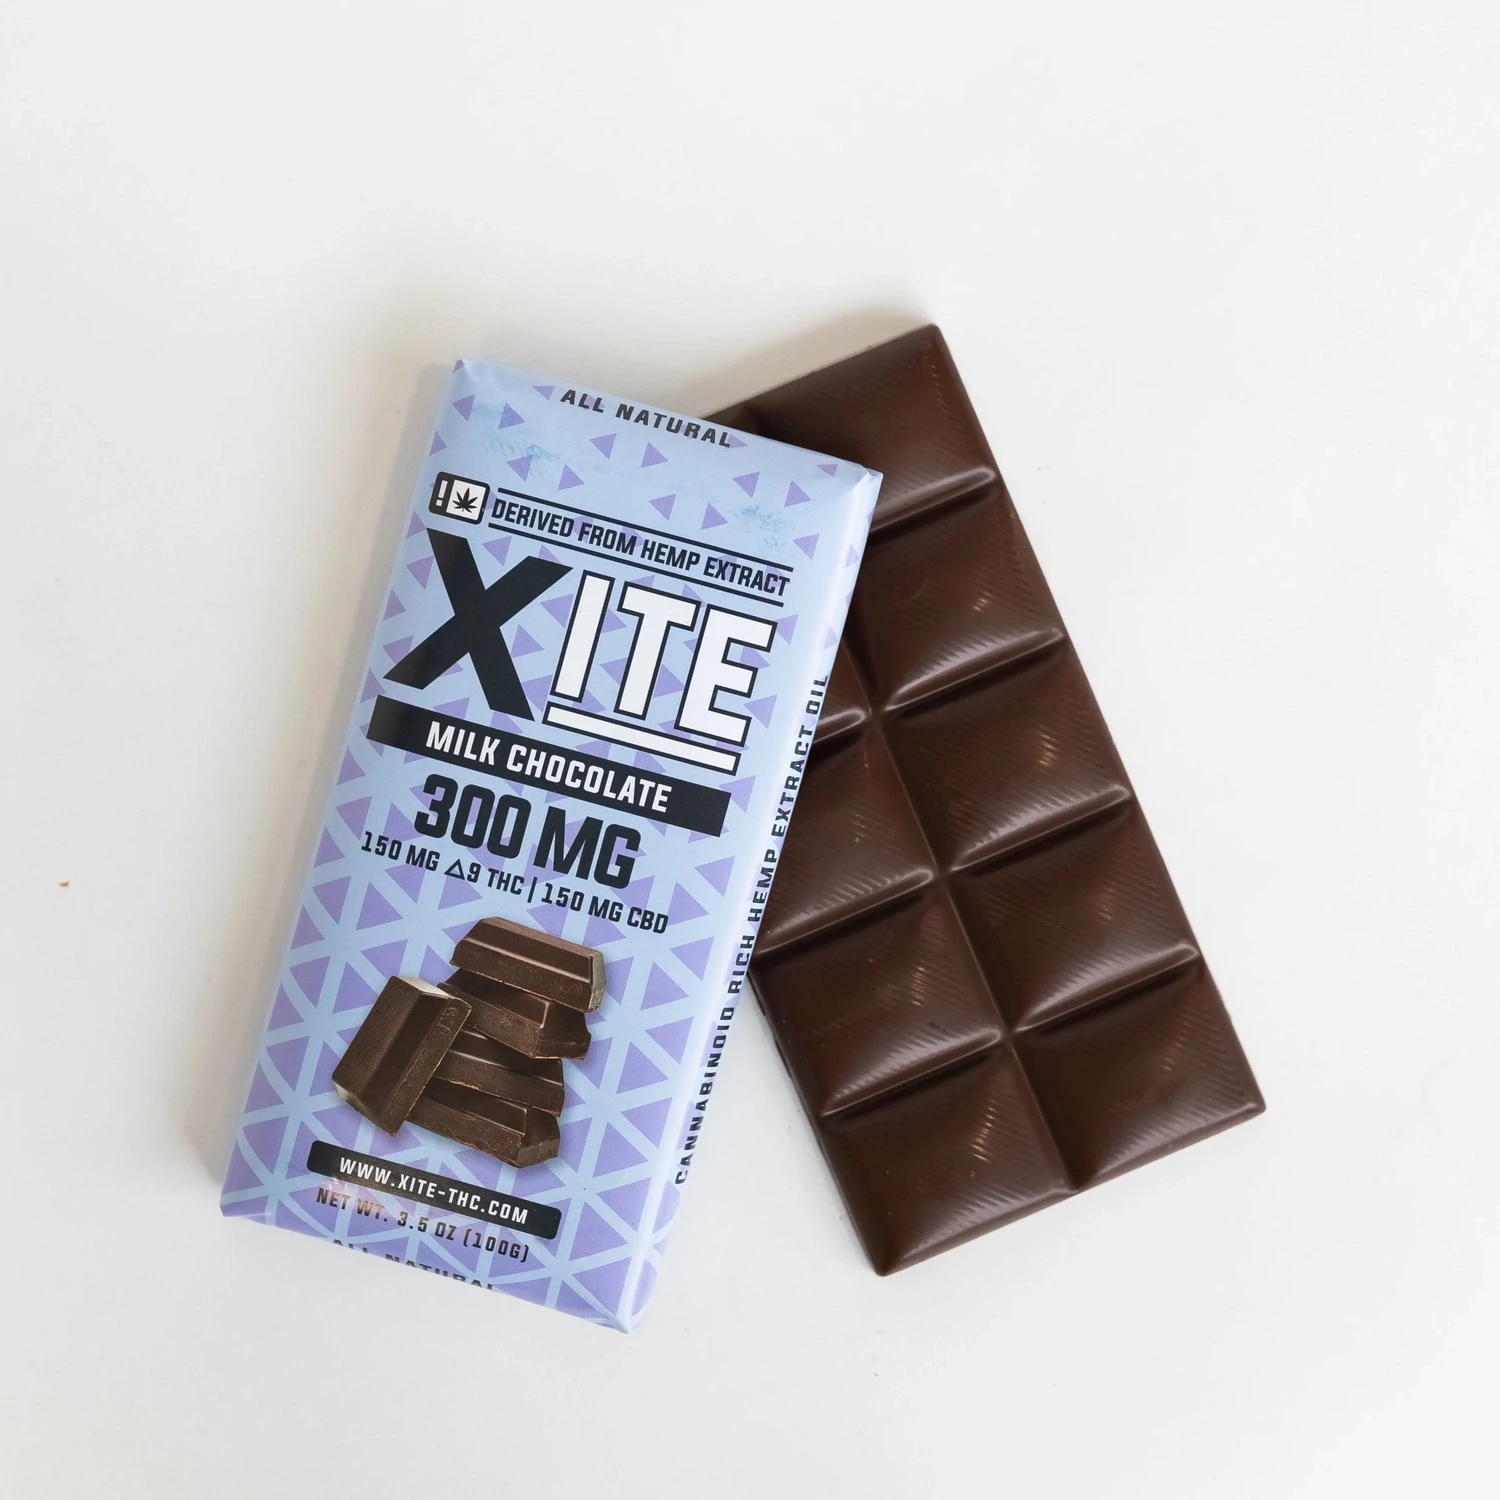 Xite Delta 9/CBD 1:1 Chocolate Bars - Large 300mg